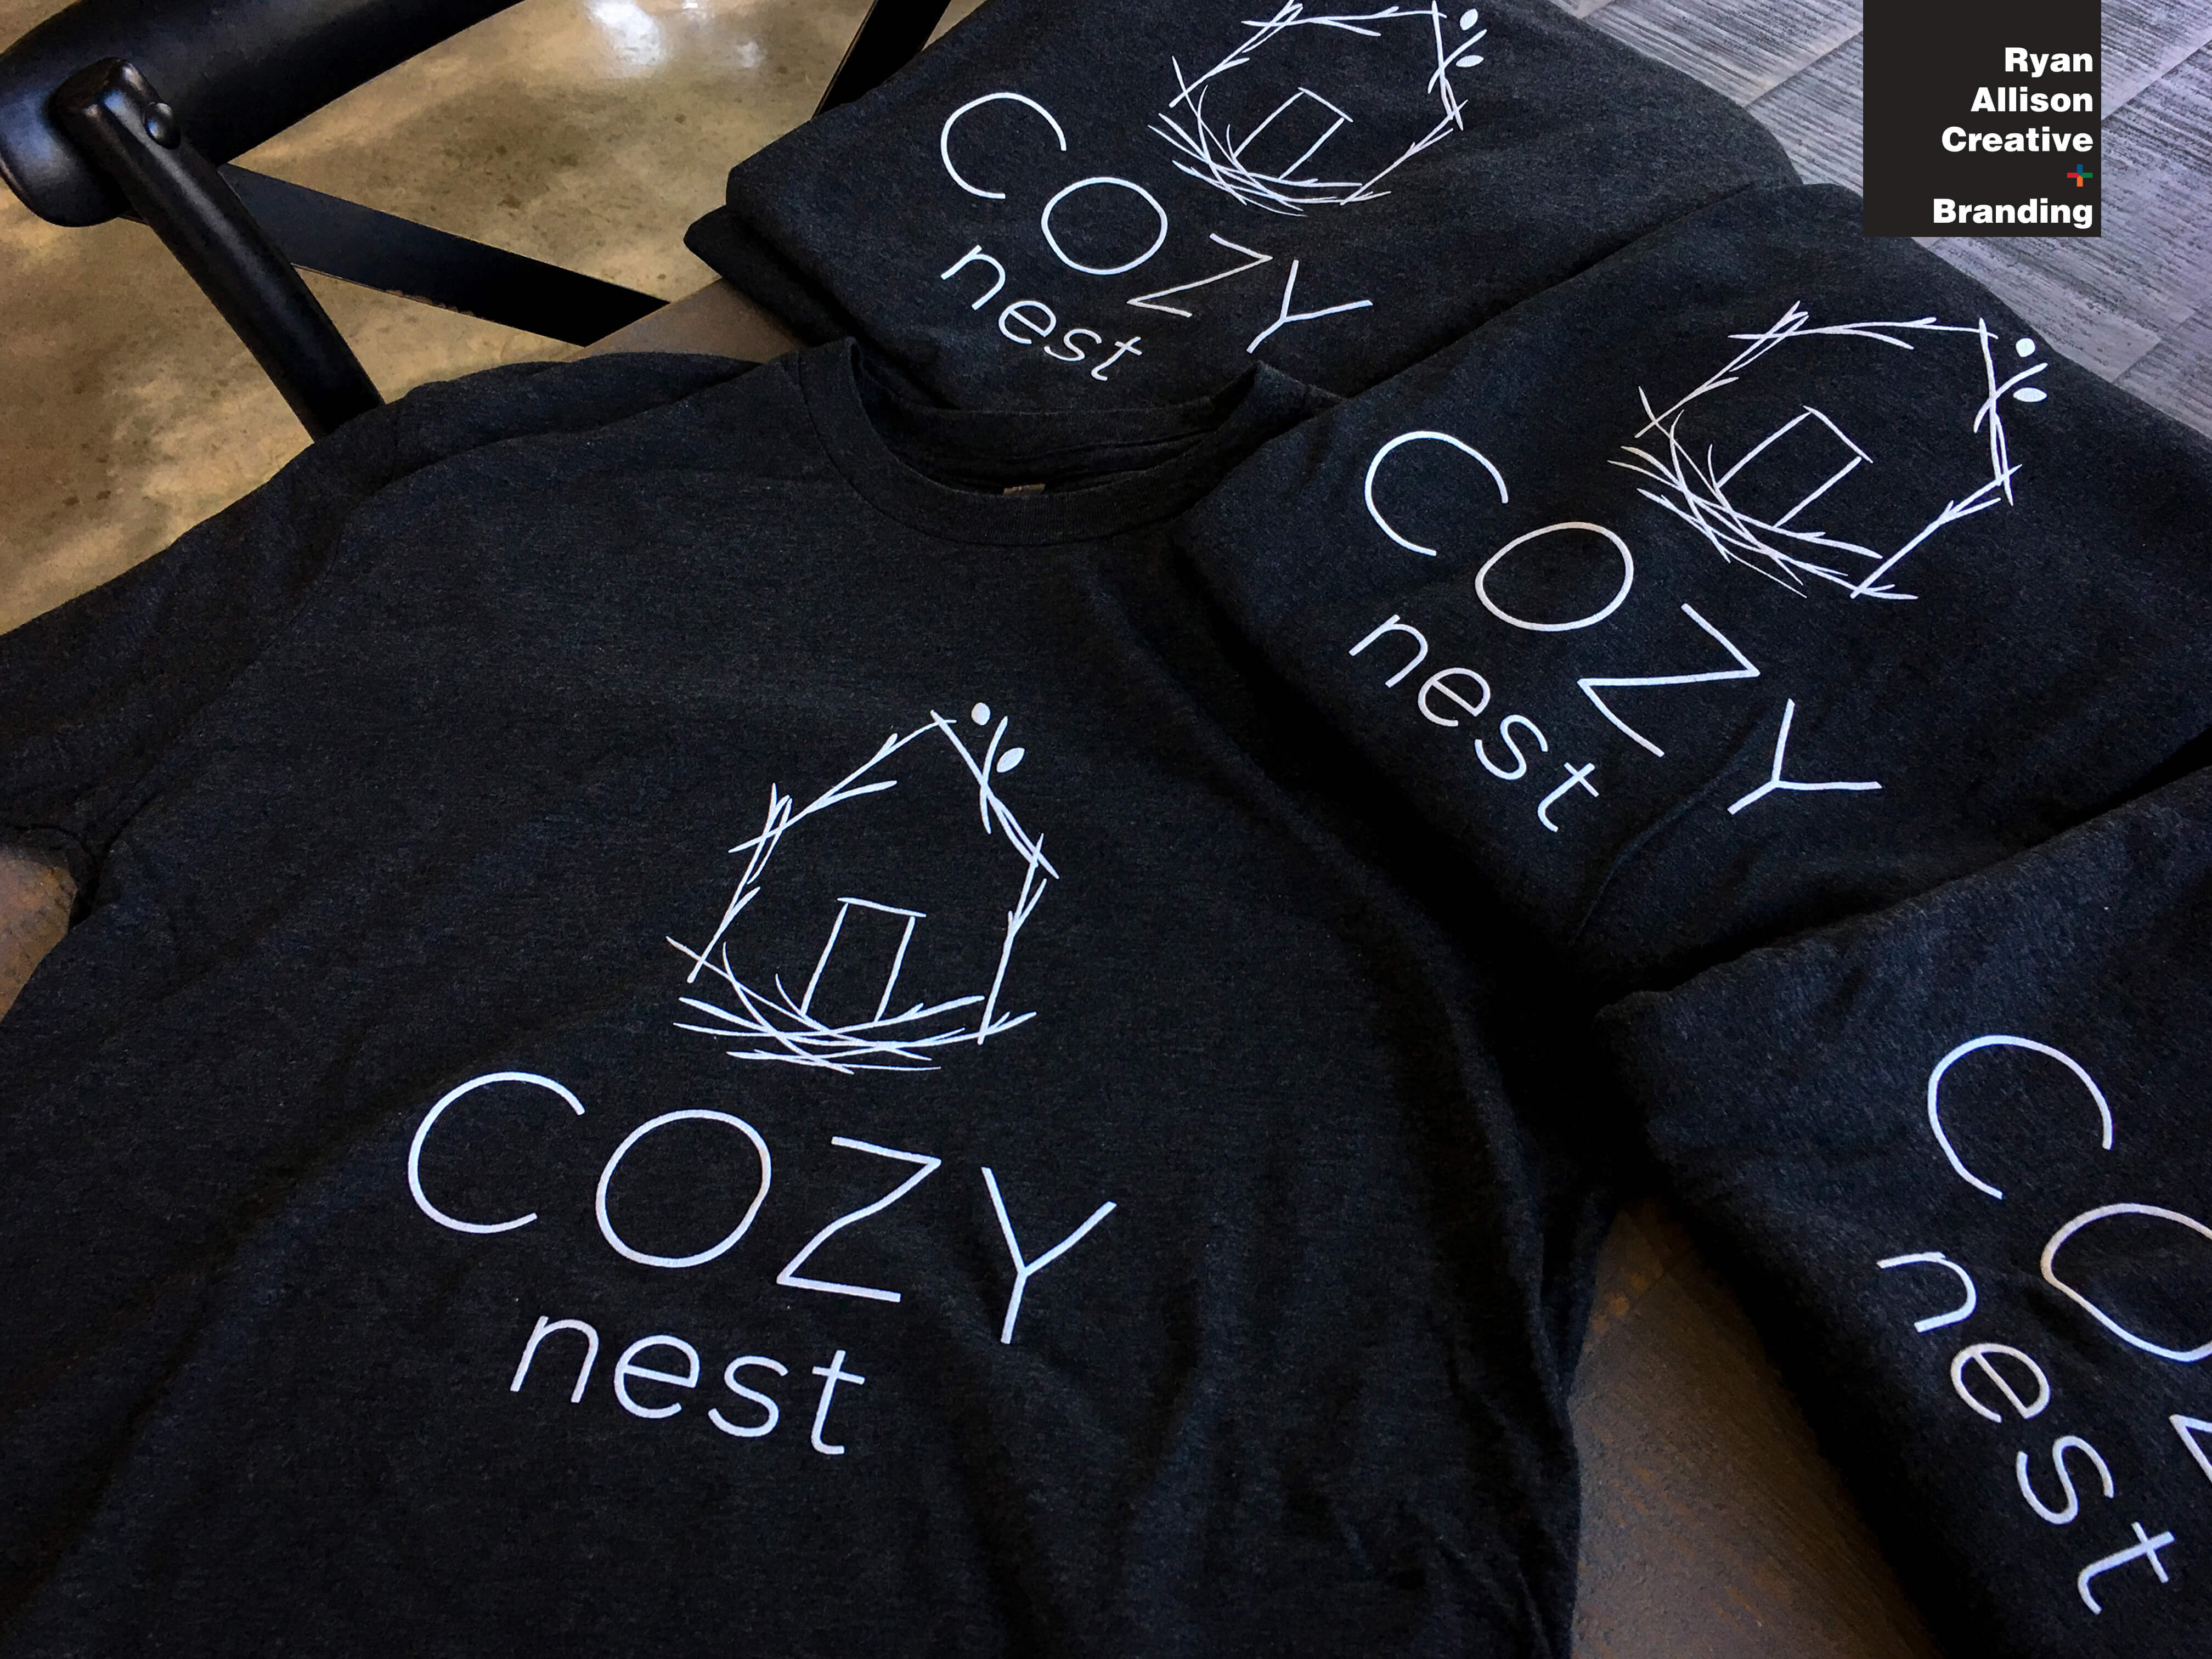 Cozy Nest - Custom T-Shirts - Ryan Allison Creative + Branding